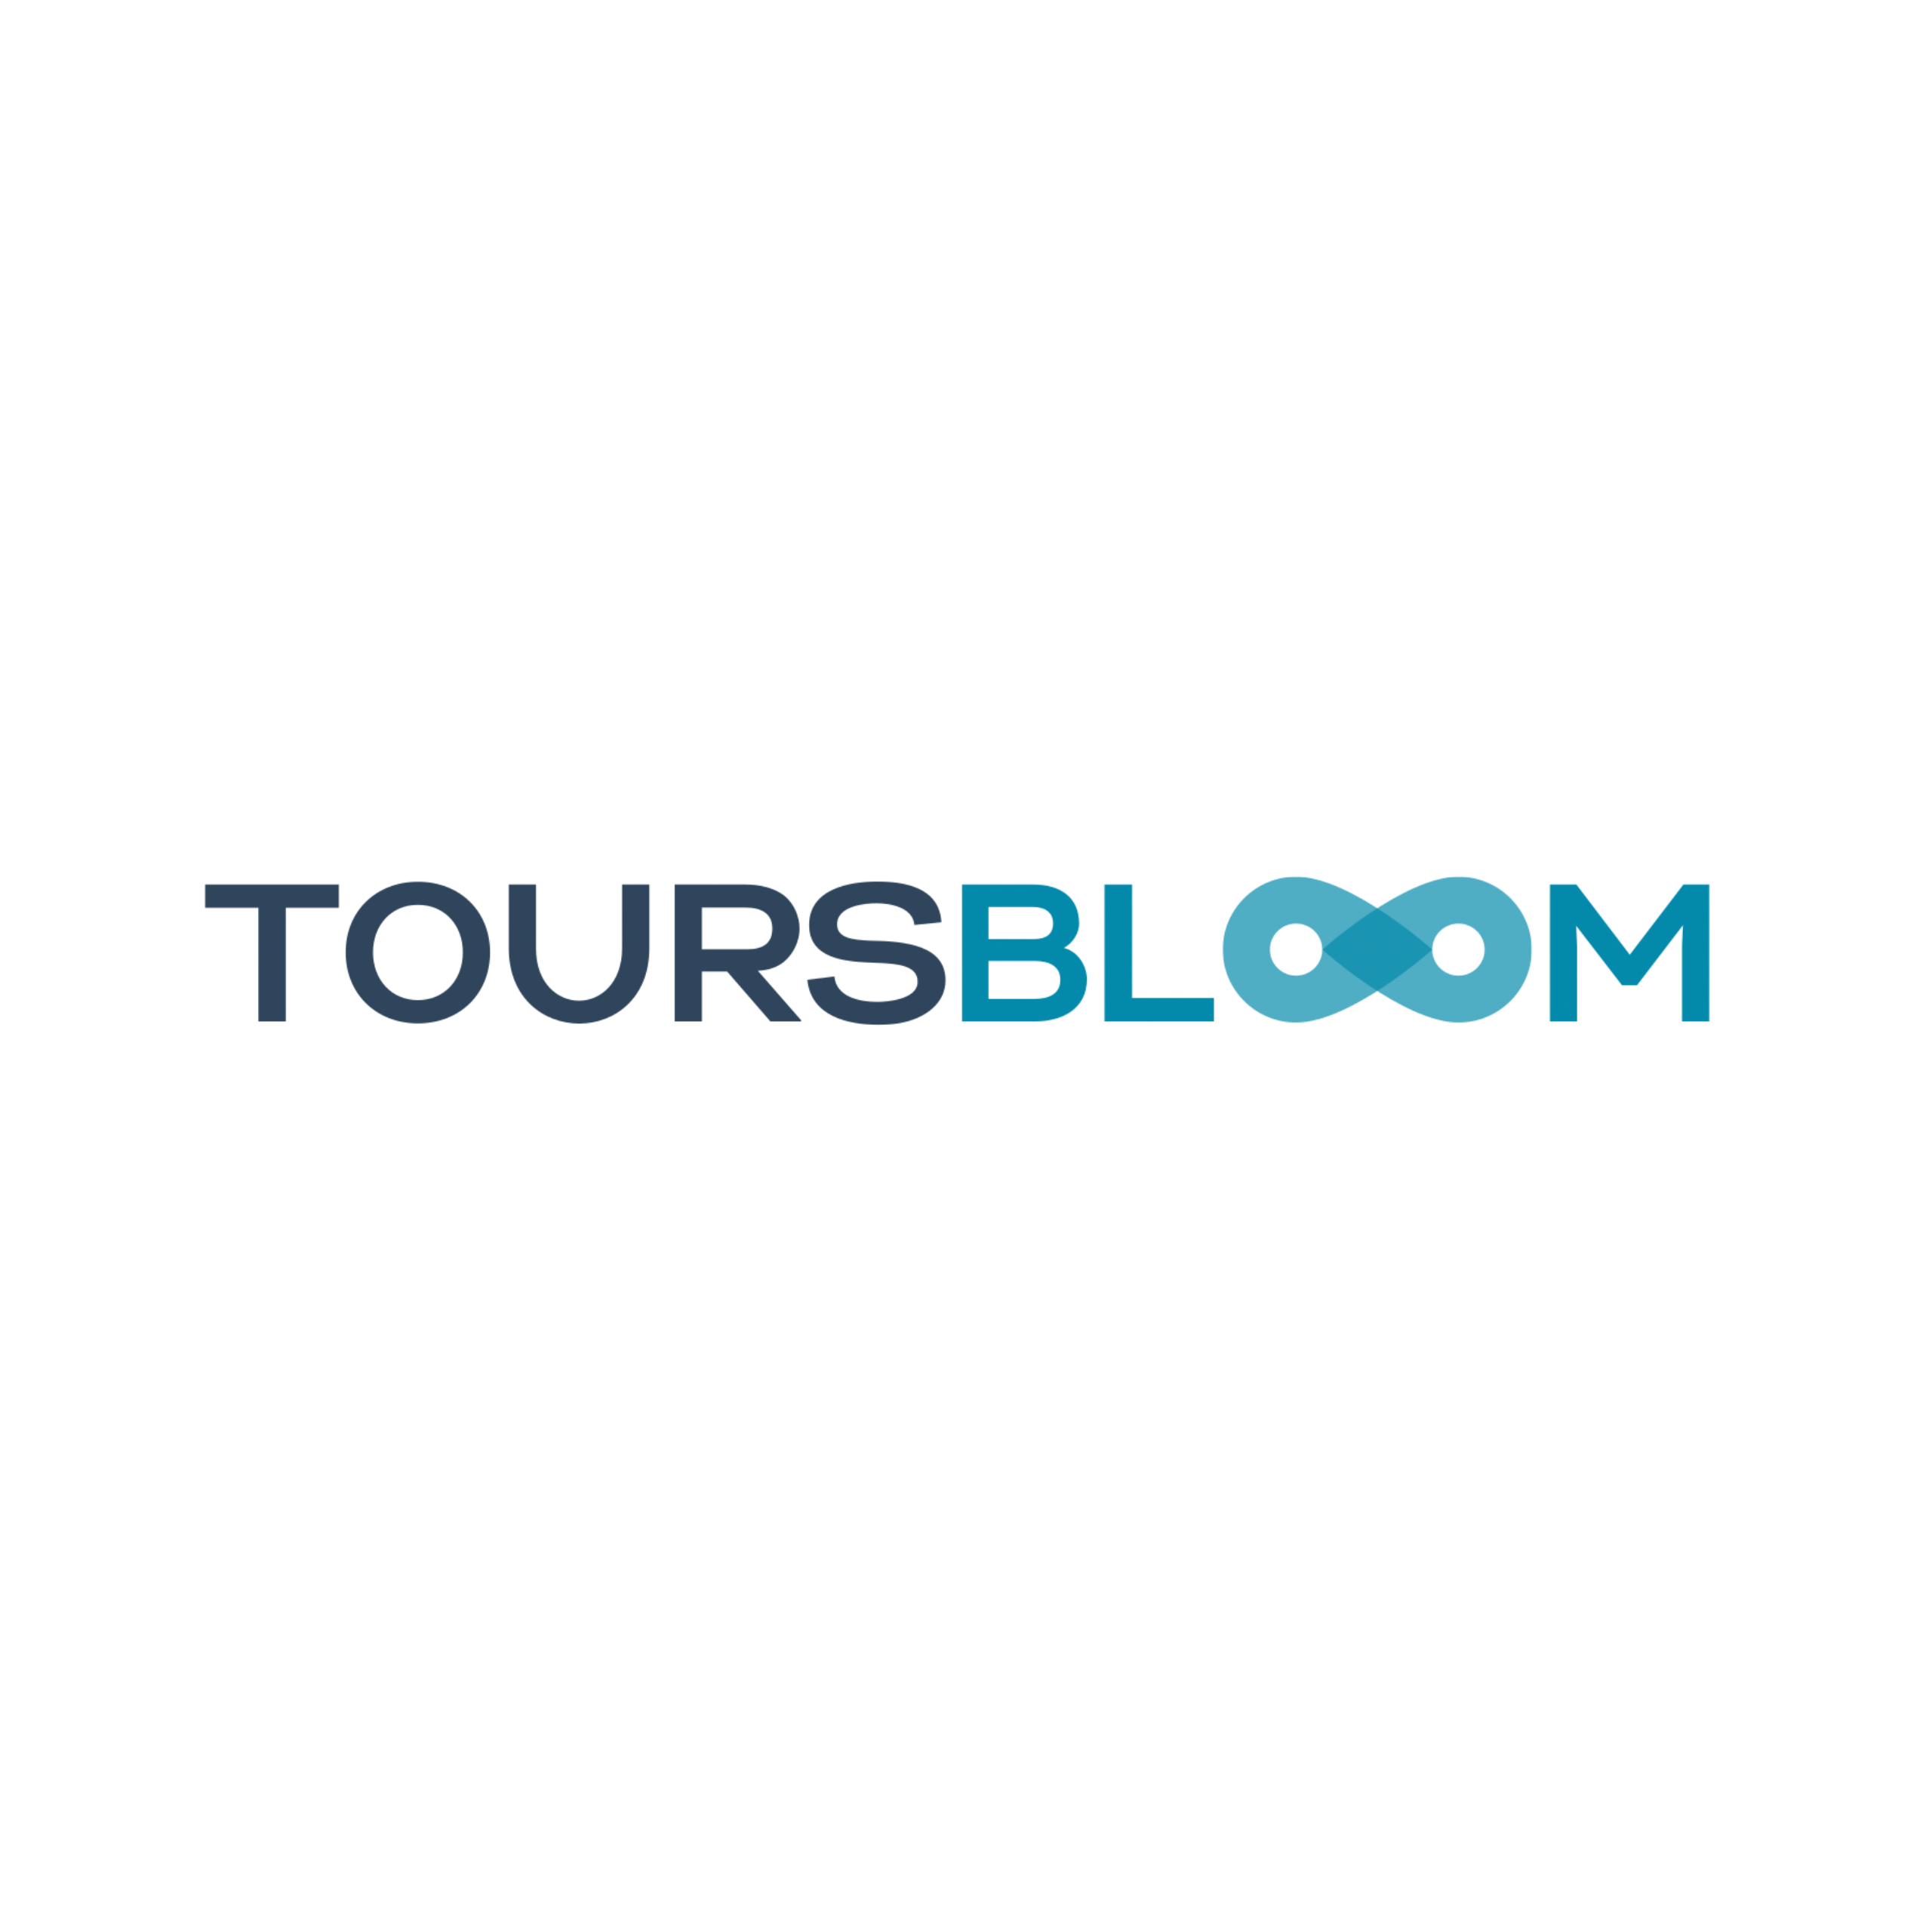 05-toursbloom_logo